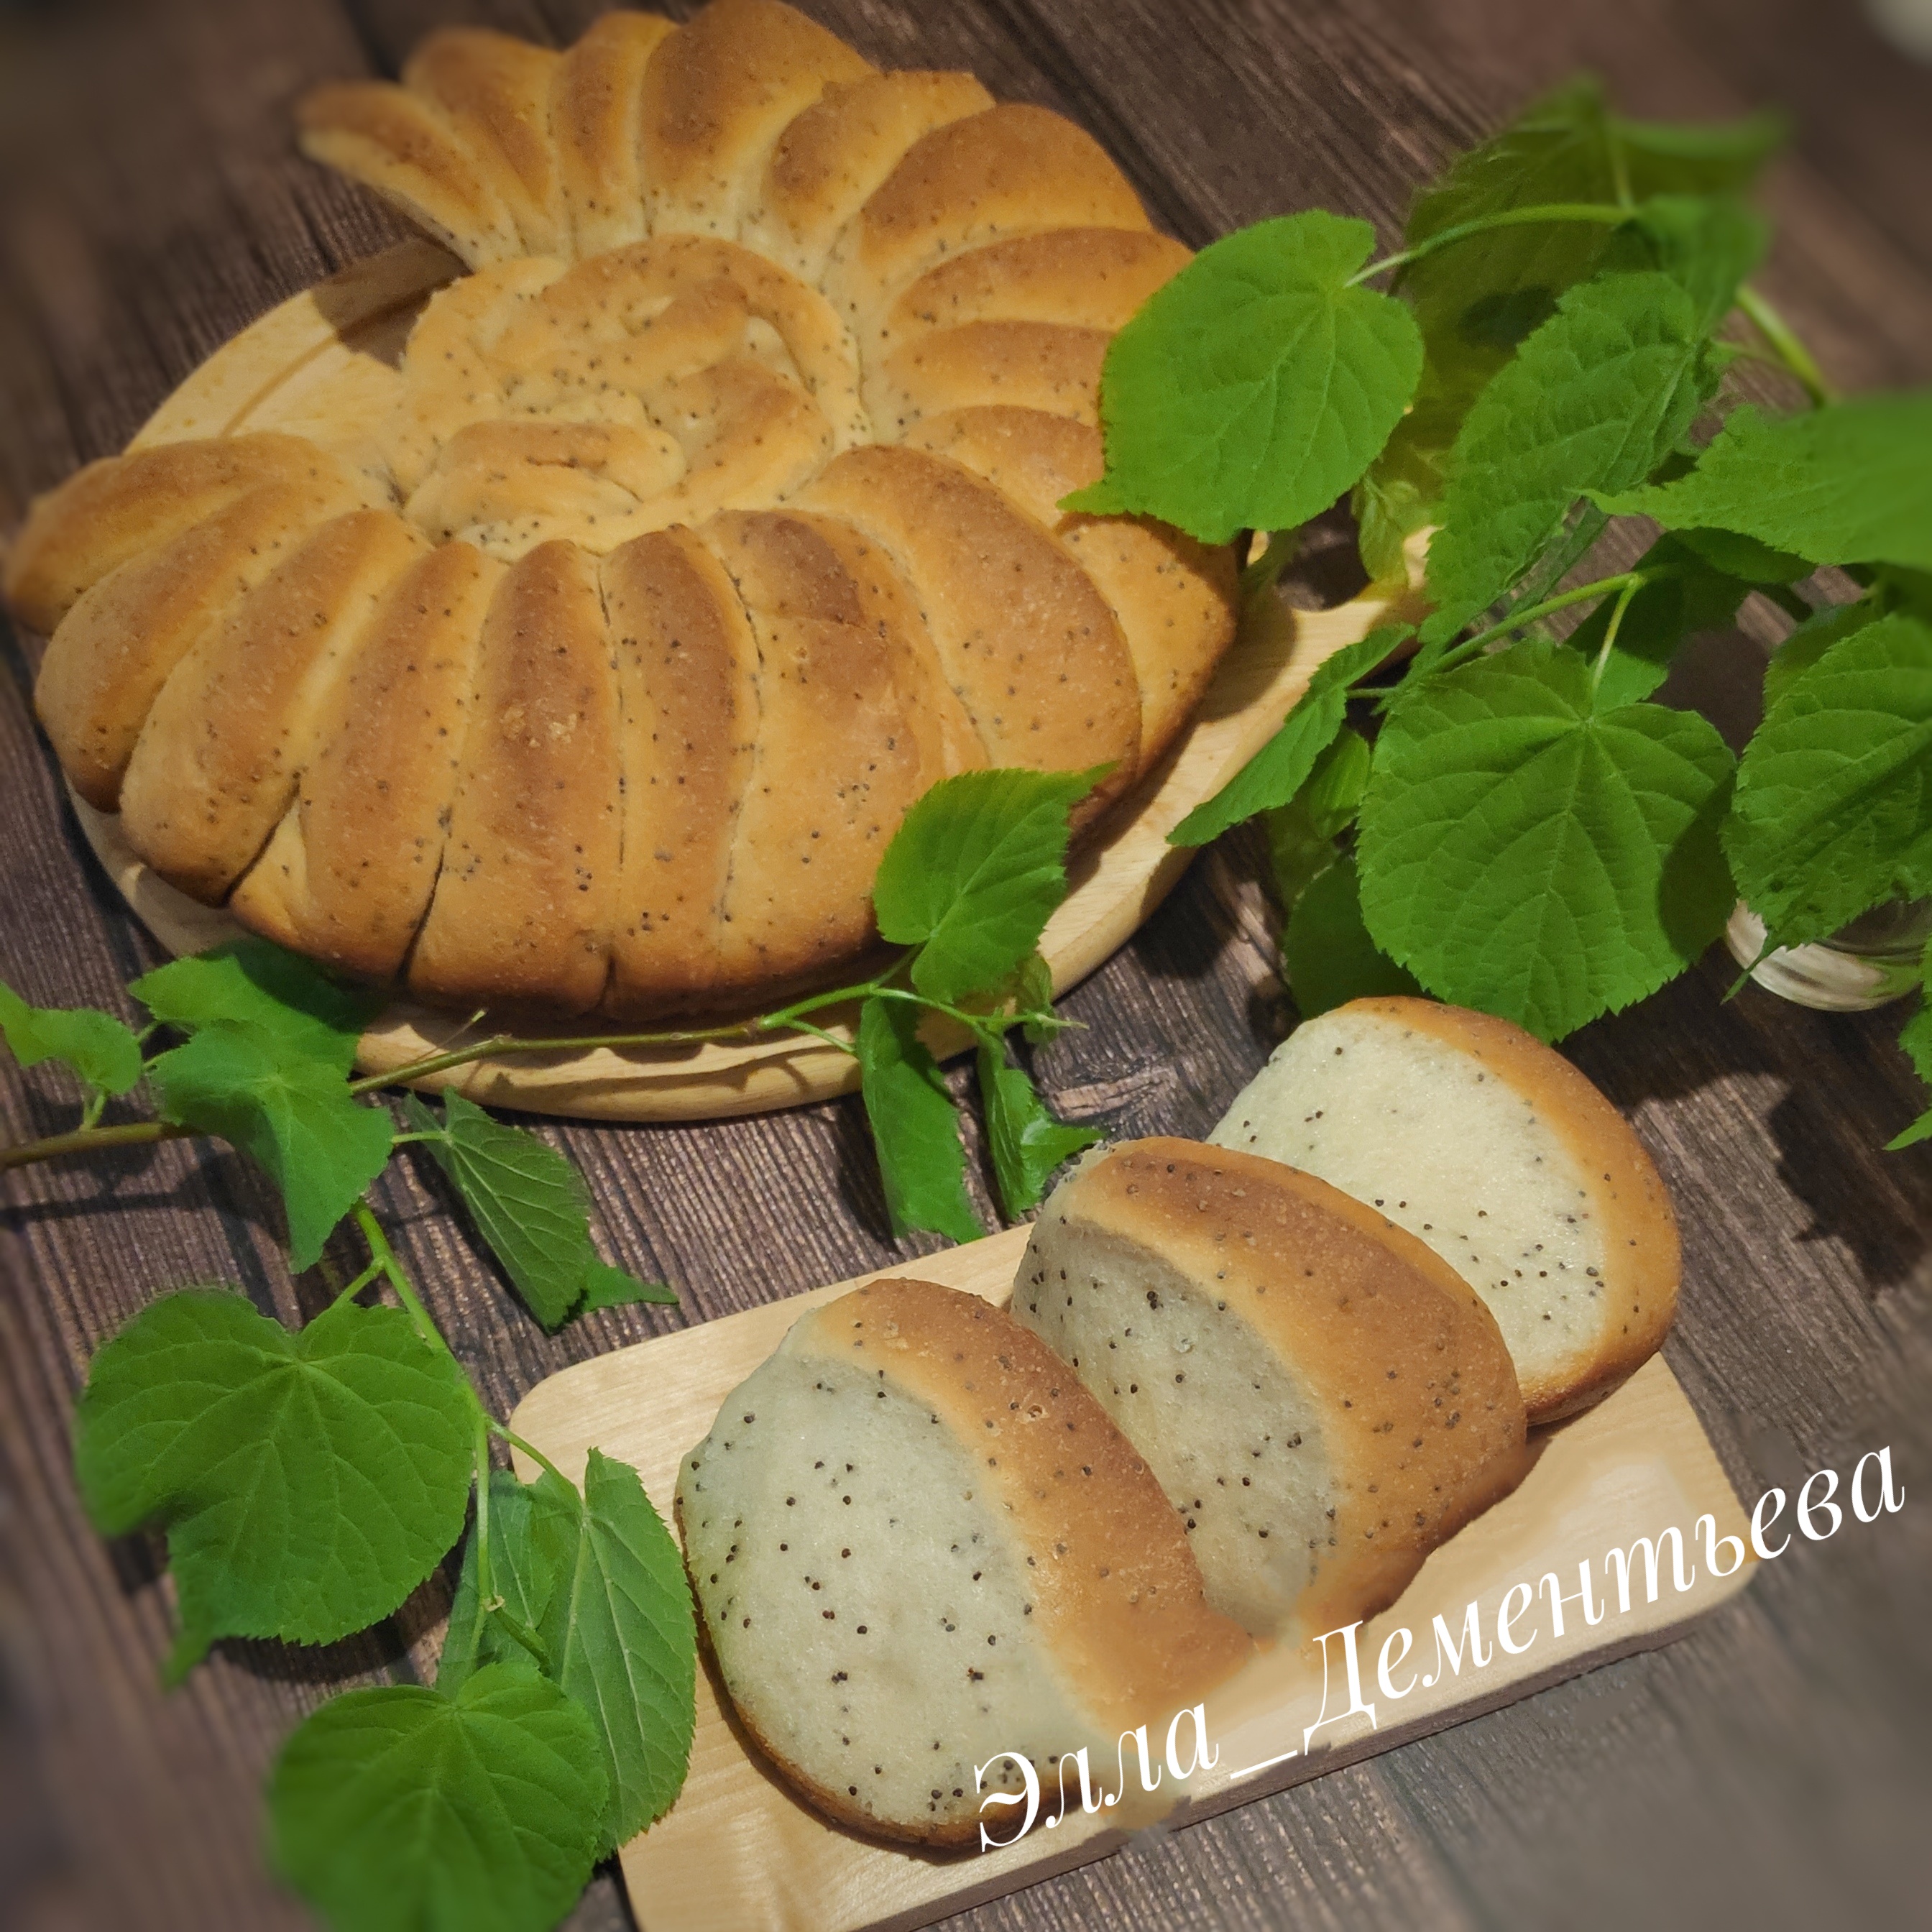 Сербский хлеб "Уши слона"